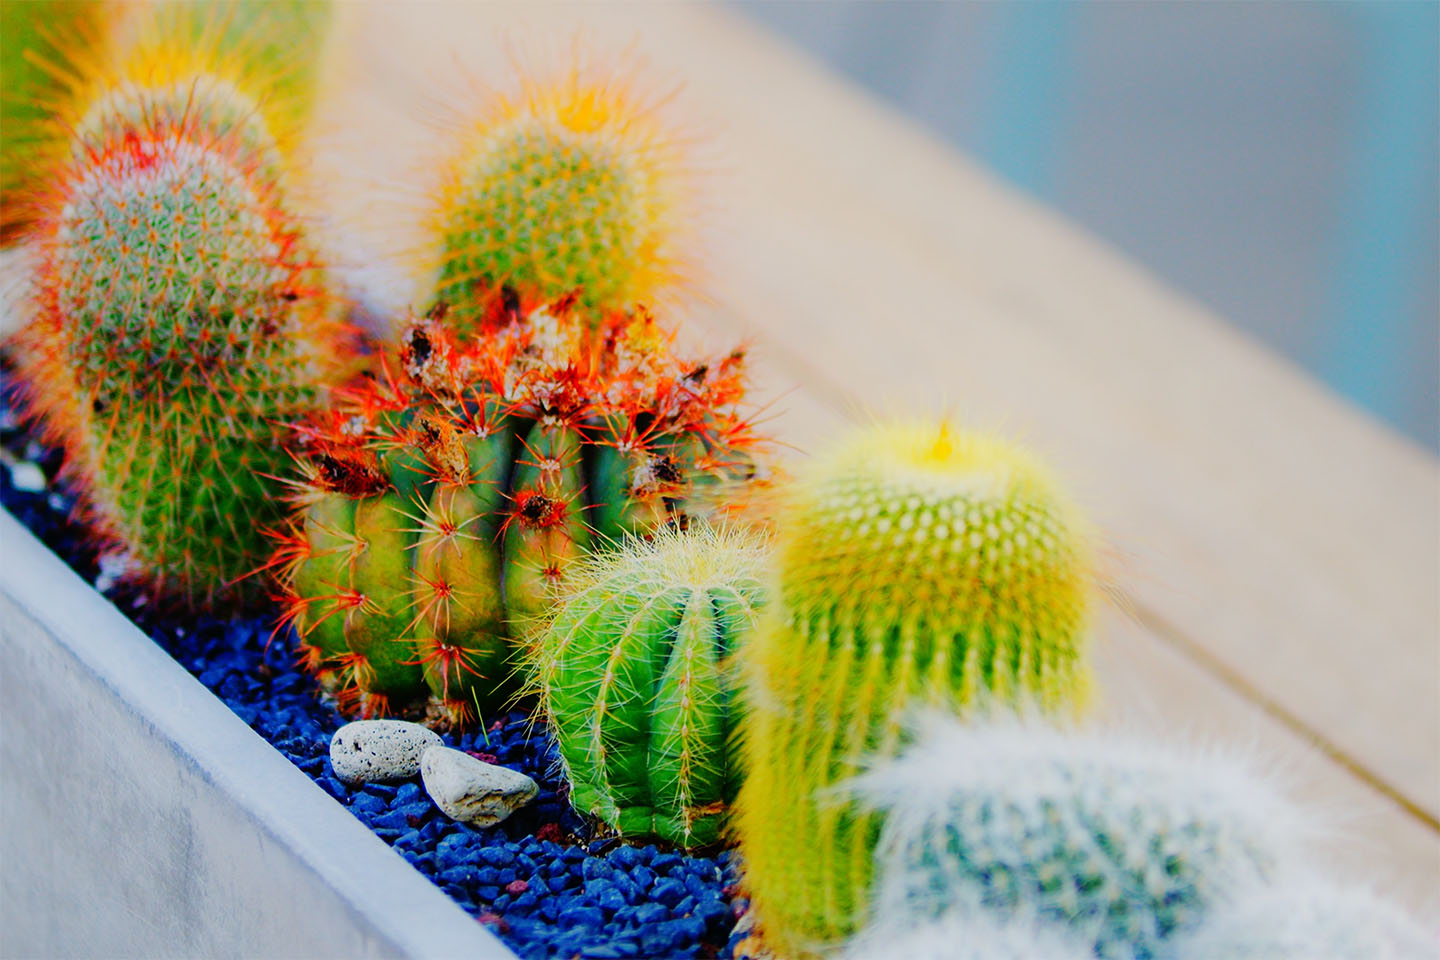 patioscape cactus gilbert